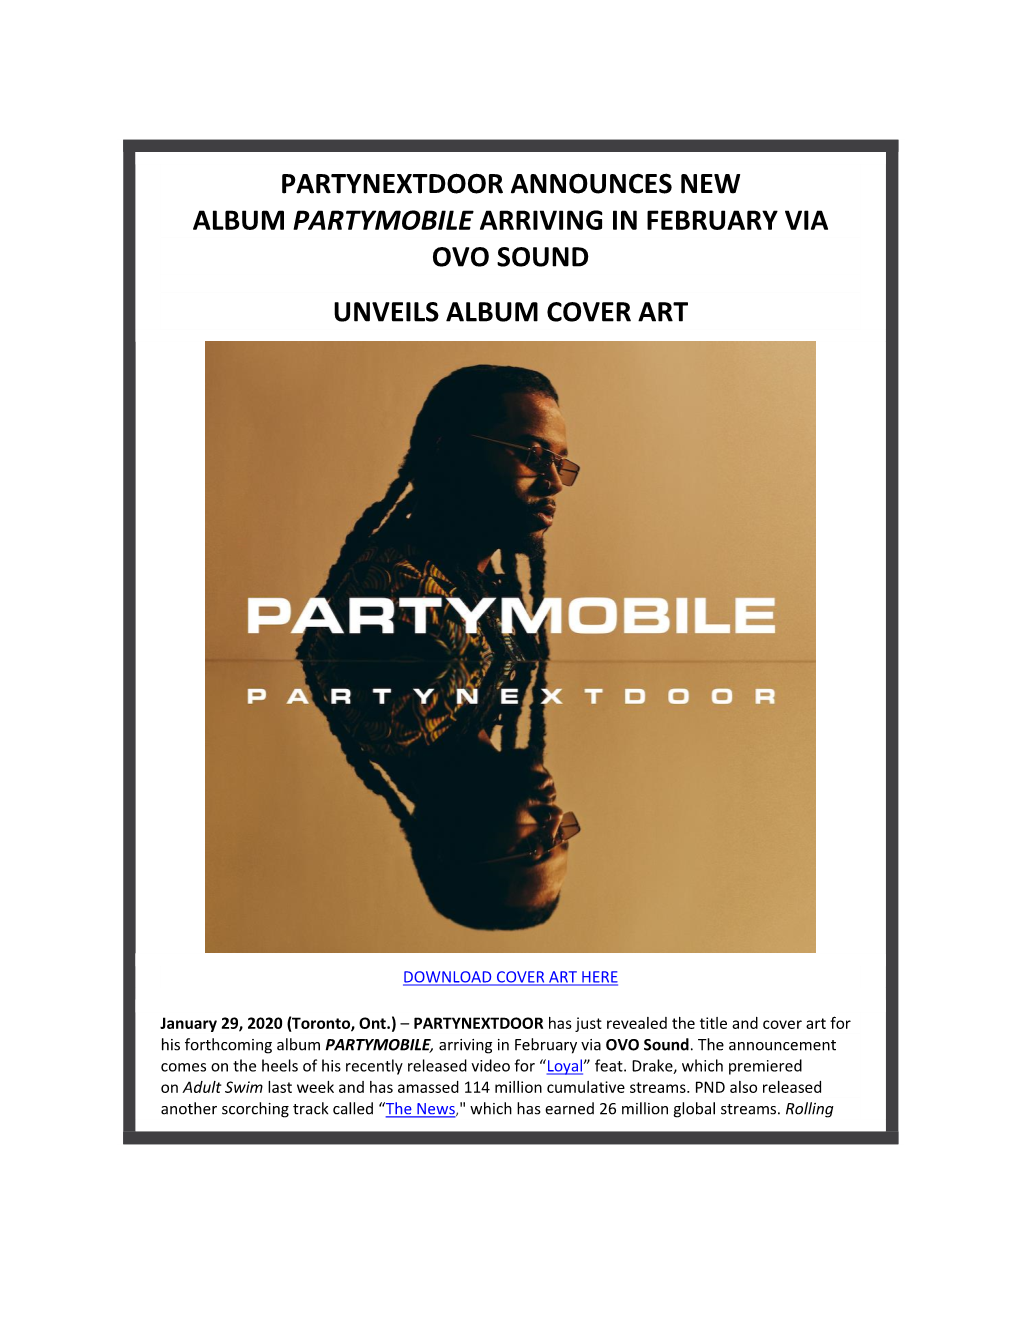 Partynextdoor Announces New Album Partymobile Arriving in February Via Ovo Sound